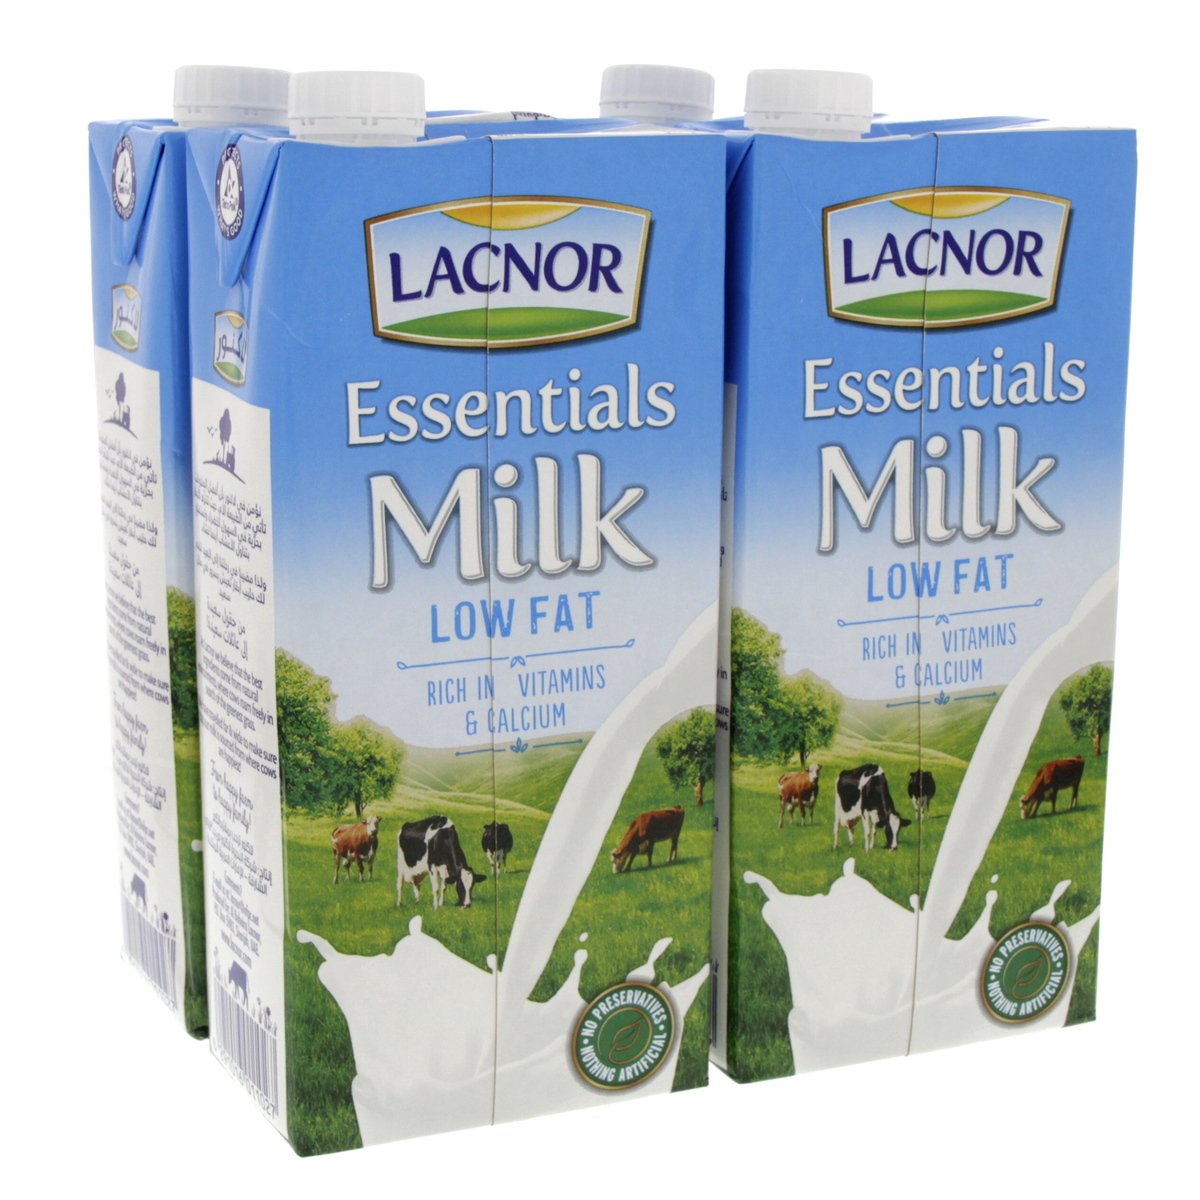 Lacnor Long Life Milk Low Fat 4 x 1 Litre